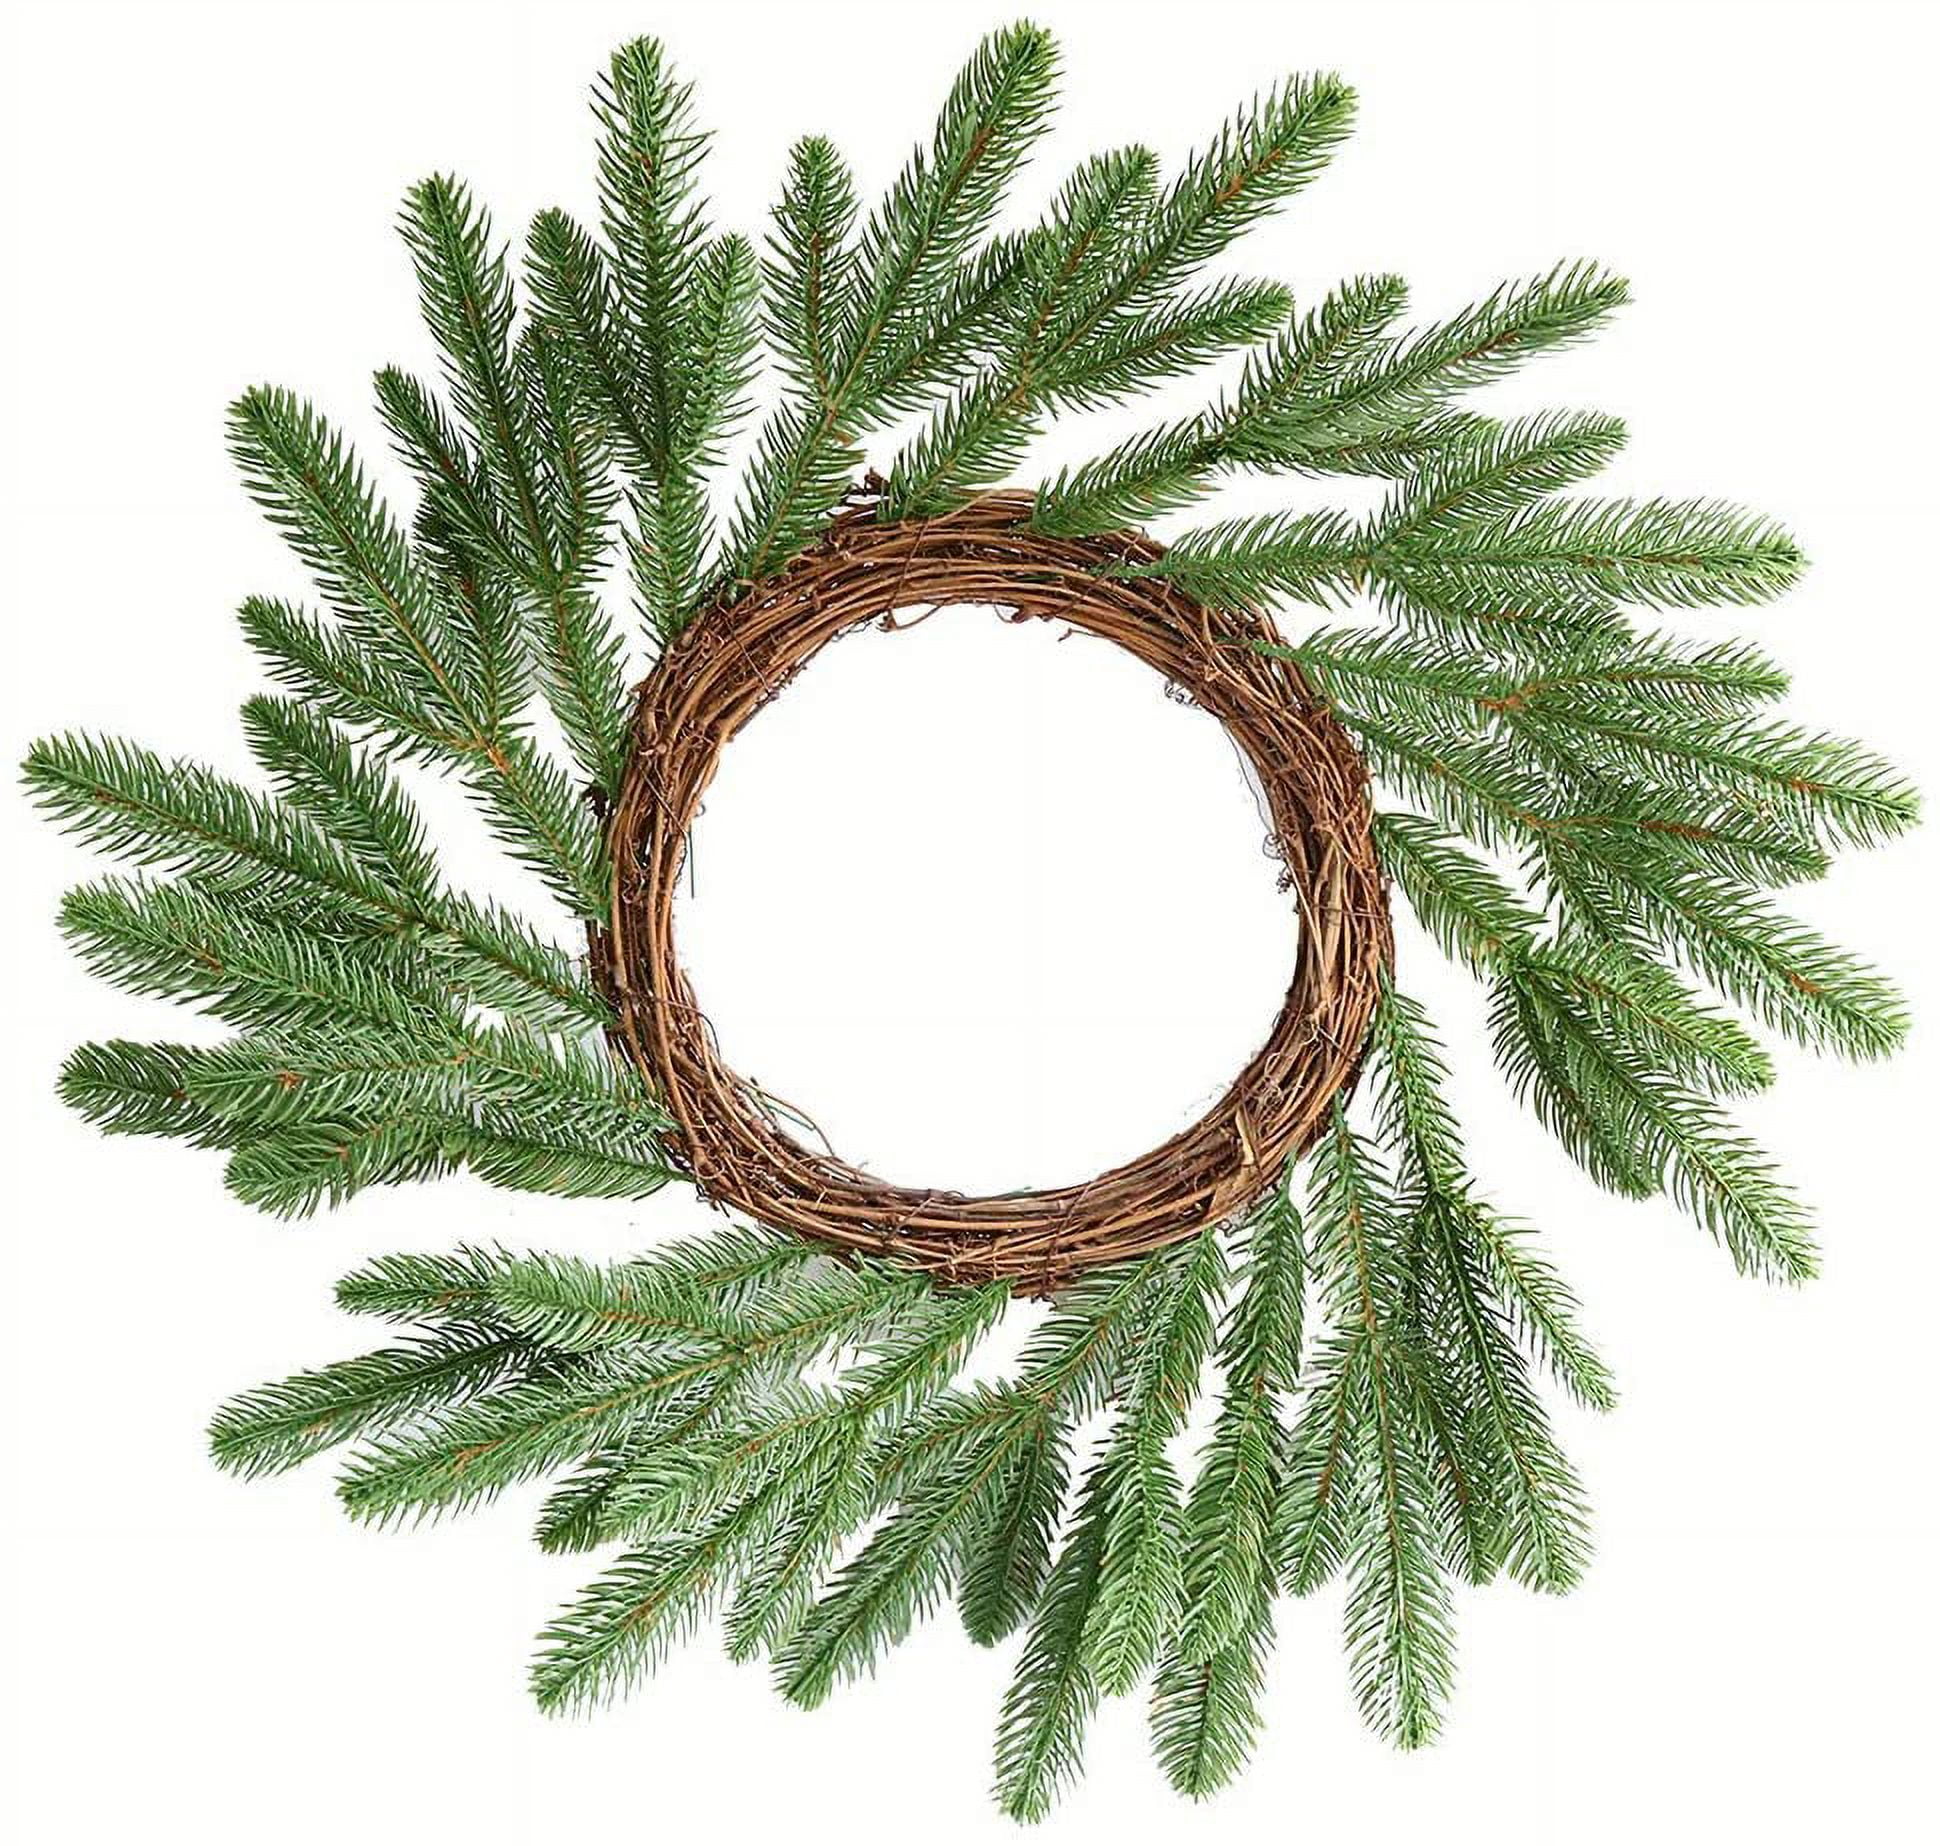 20pcs Artificial Pine Branches Faux Leaves Picks for Christmas Decor DIY Wreath (Pine Branch)